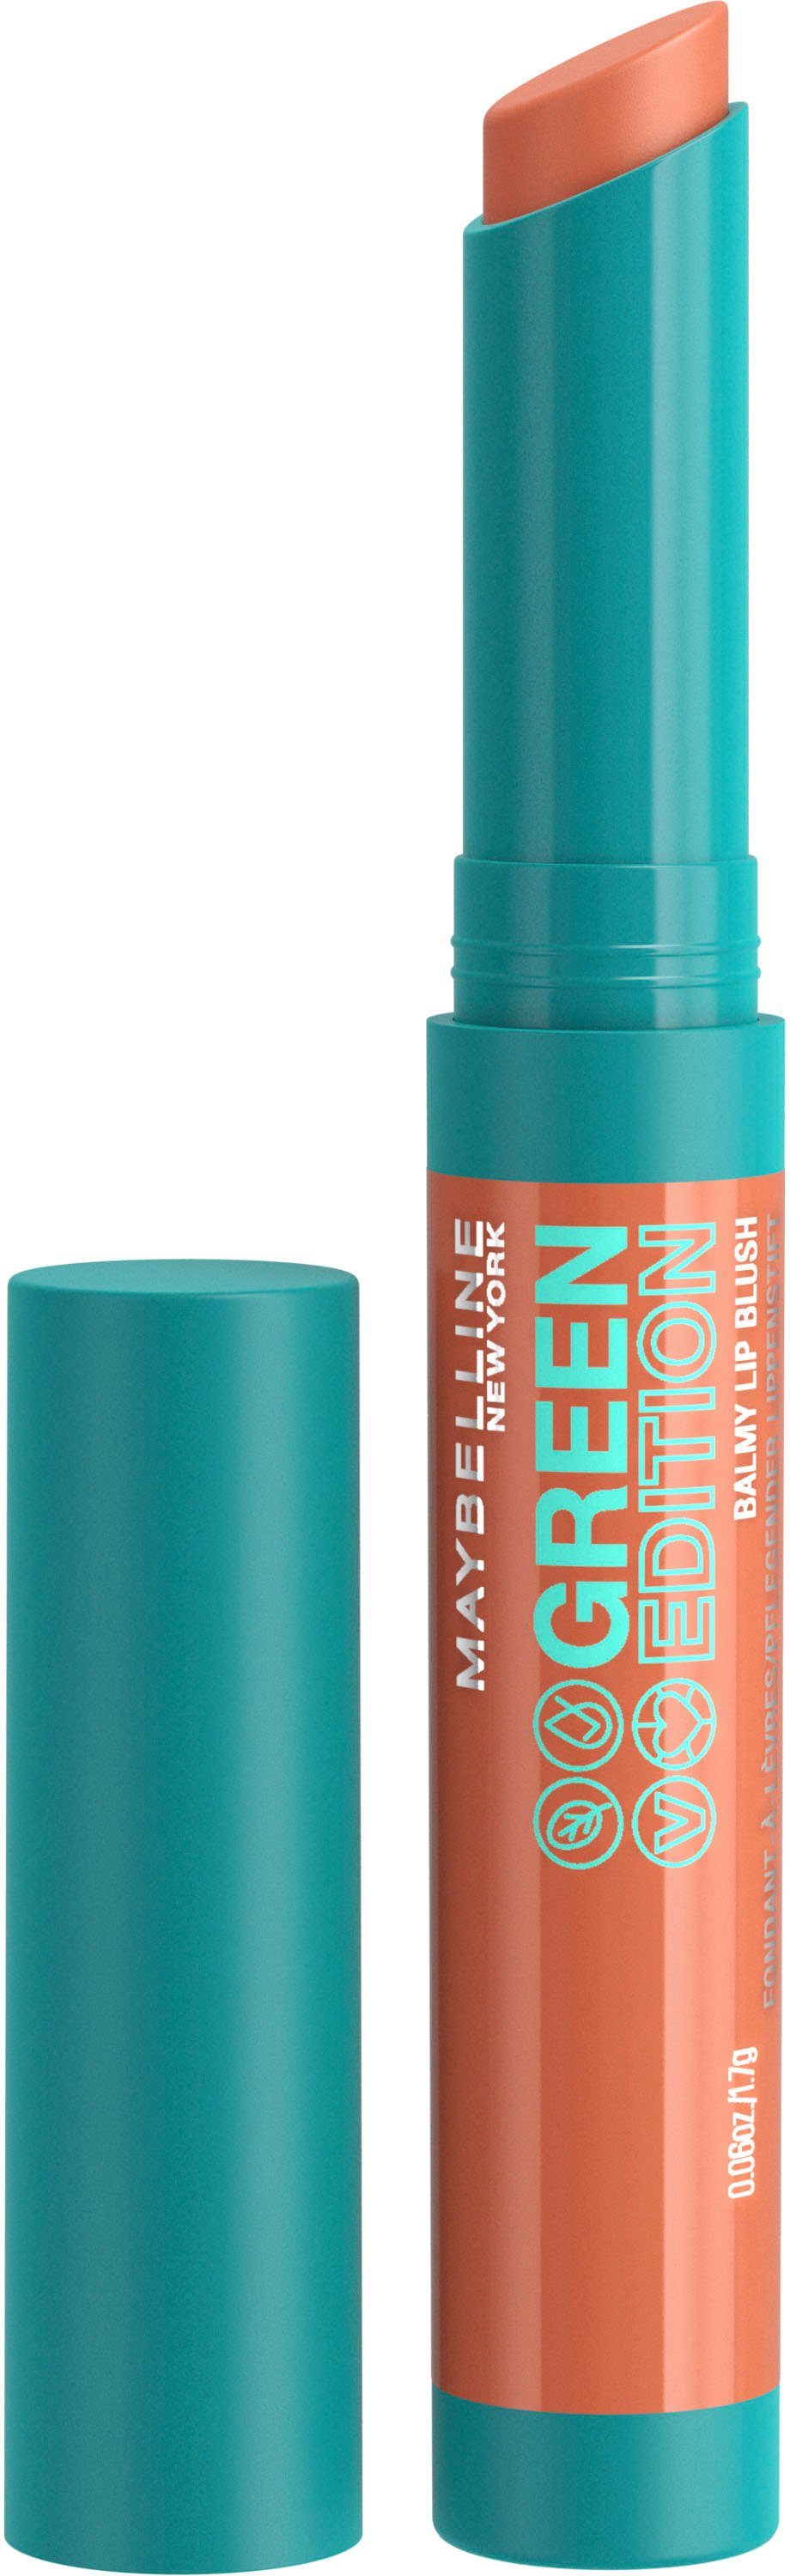 Desert Edition 008 Balmy Lip Green NEW MAYBELLINE Lippenstift YORK Blush